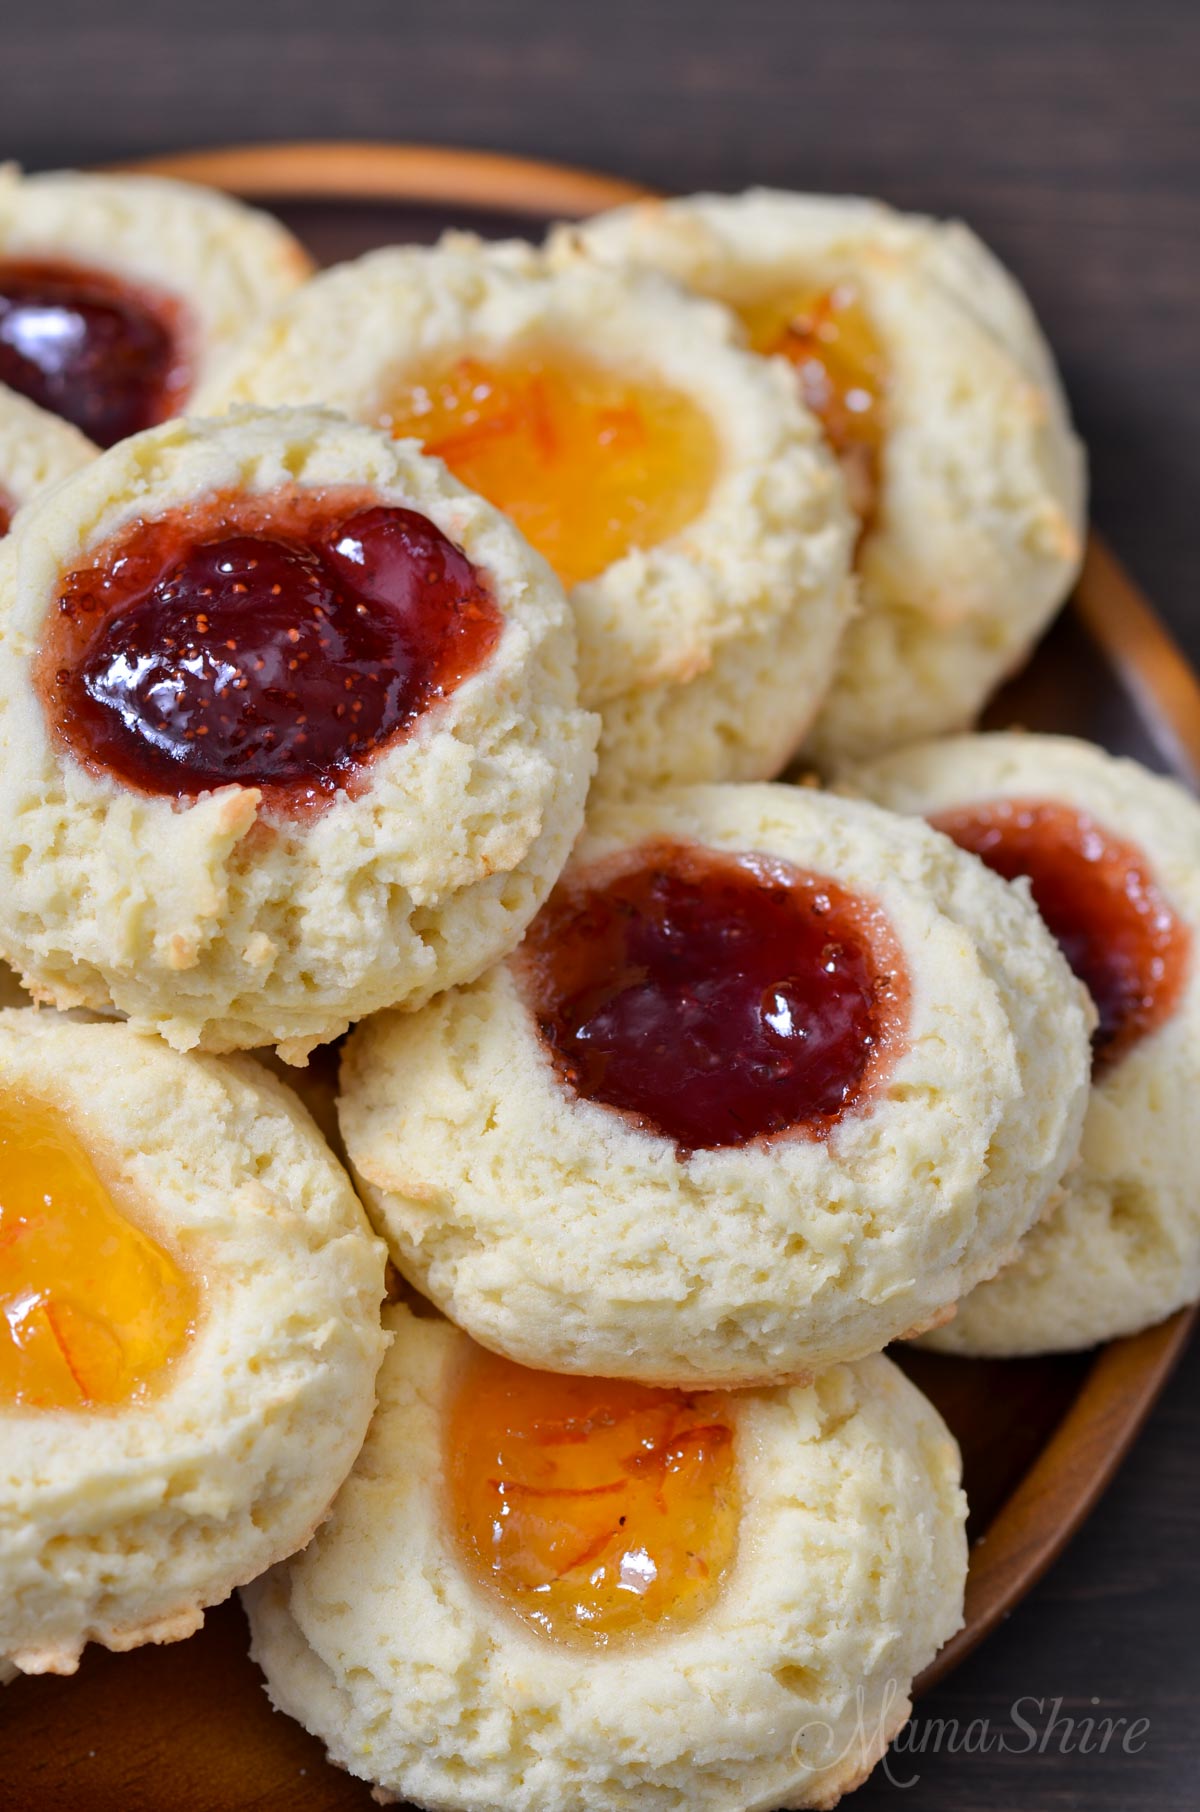 Strawberry jam and orange marmalade thumbprint cookies.